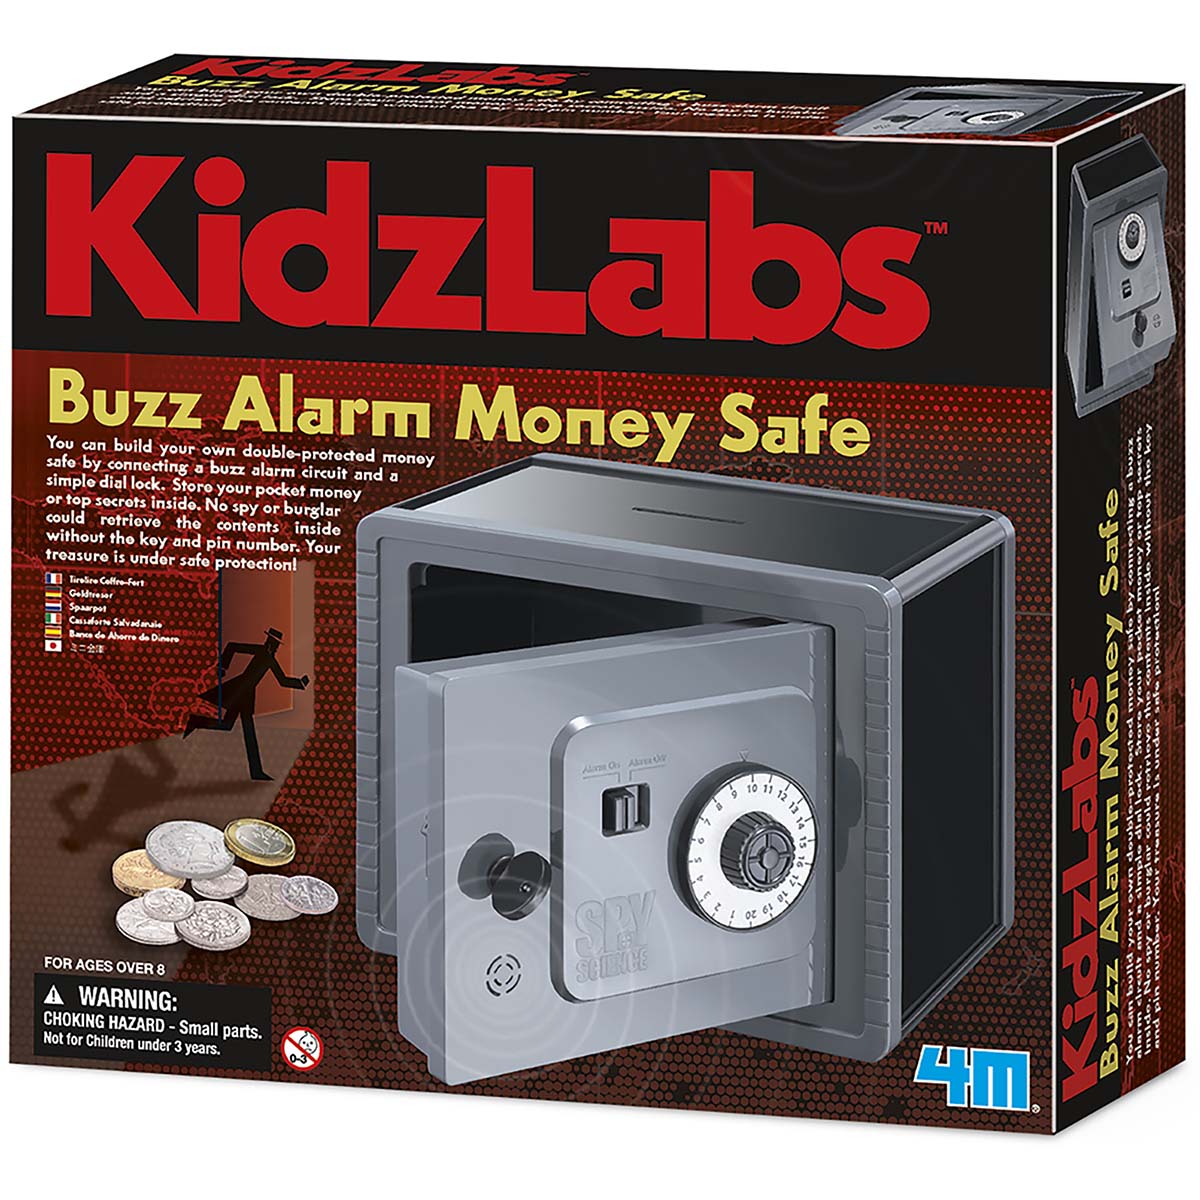 KidzLabs Buzz Alarm Money Safe